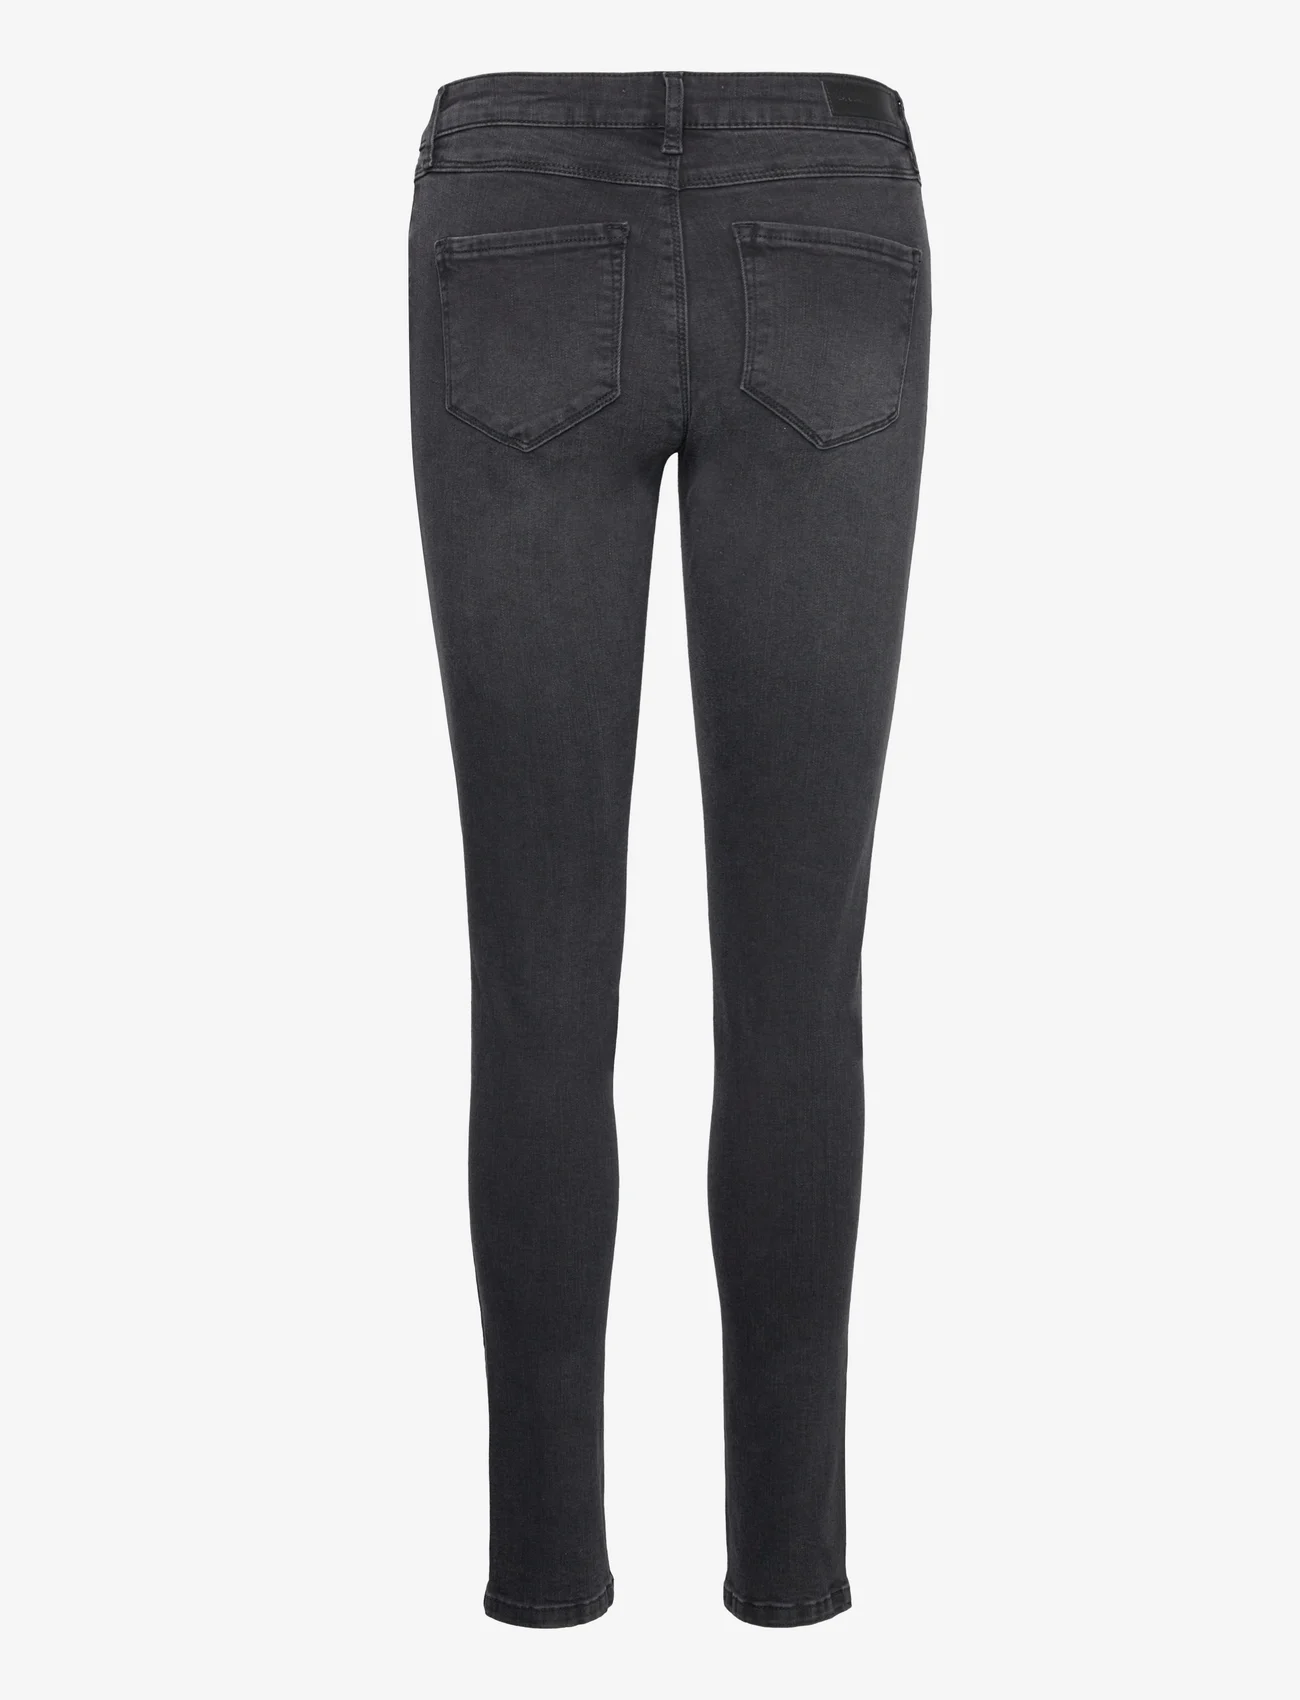 Soyaconcept - SC-KIMBERLY LANA - slim fit jeans - dark grey denim - 1